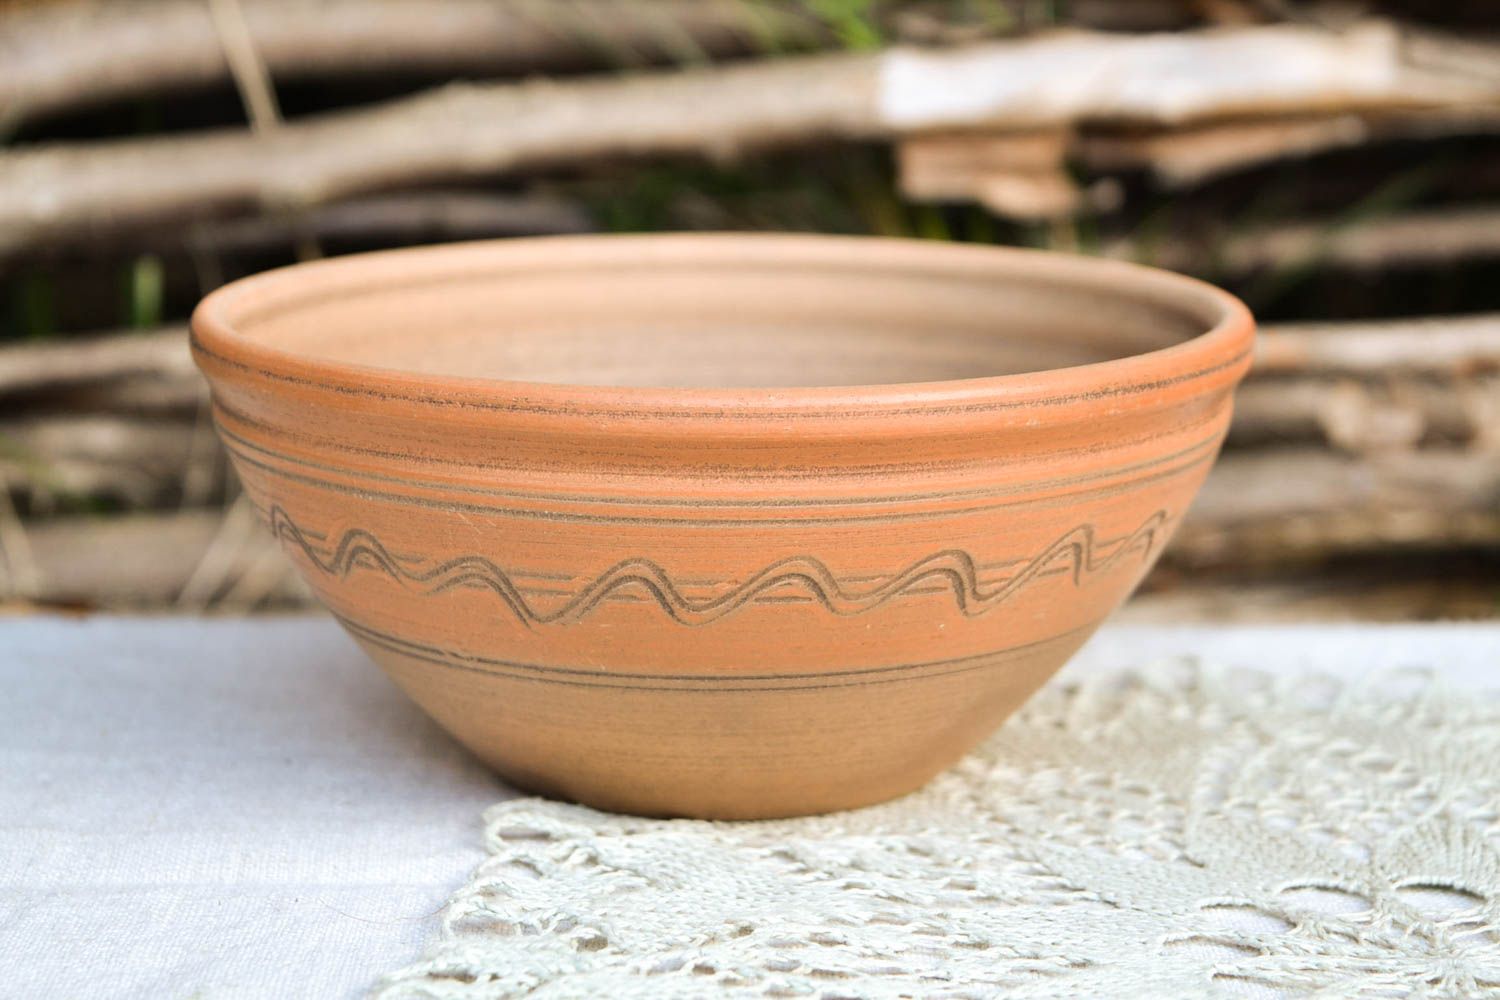 6 8 oz handmade ceramic Italian style cereal bowl 0,71 lb photo 1